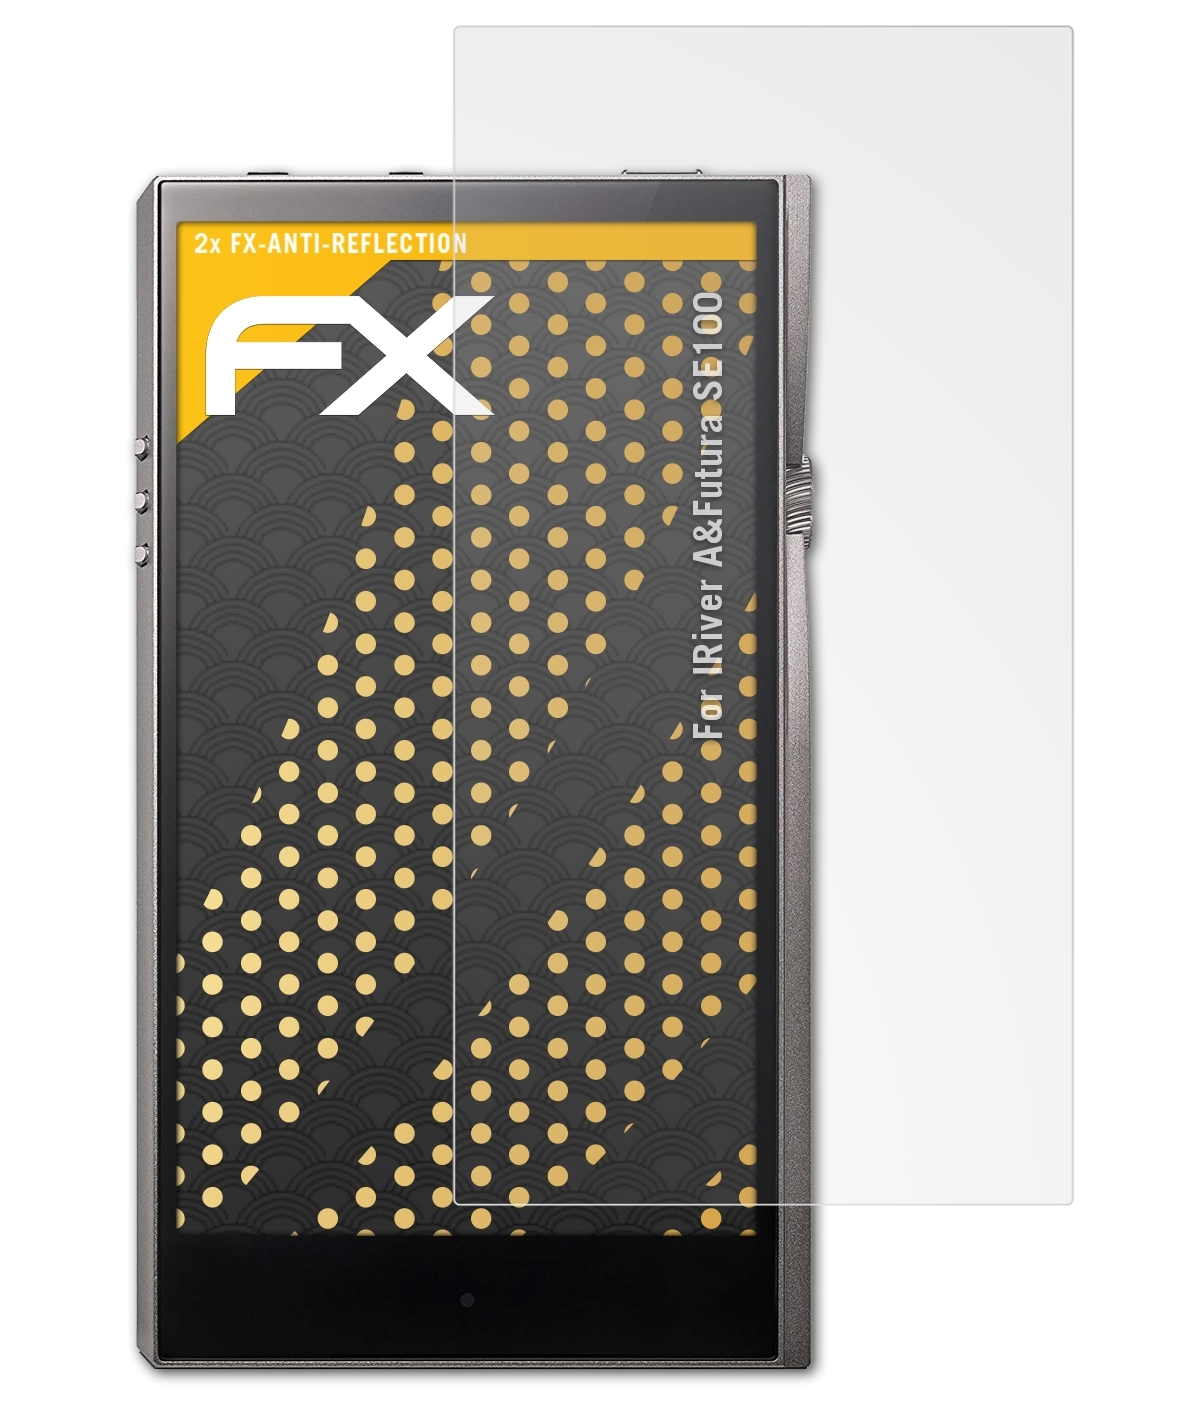 ATFOLIX 2x FX-Antireflex SE100) Displayschutz(für A&Futura IRiver